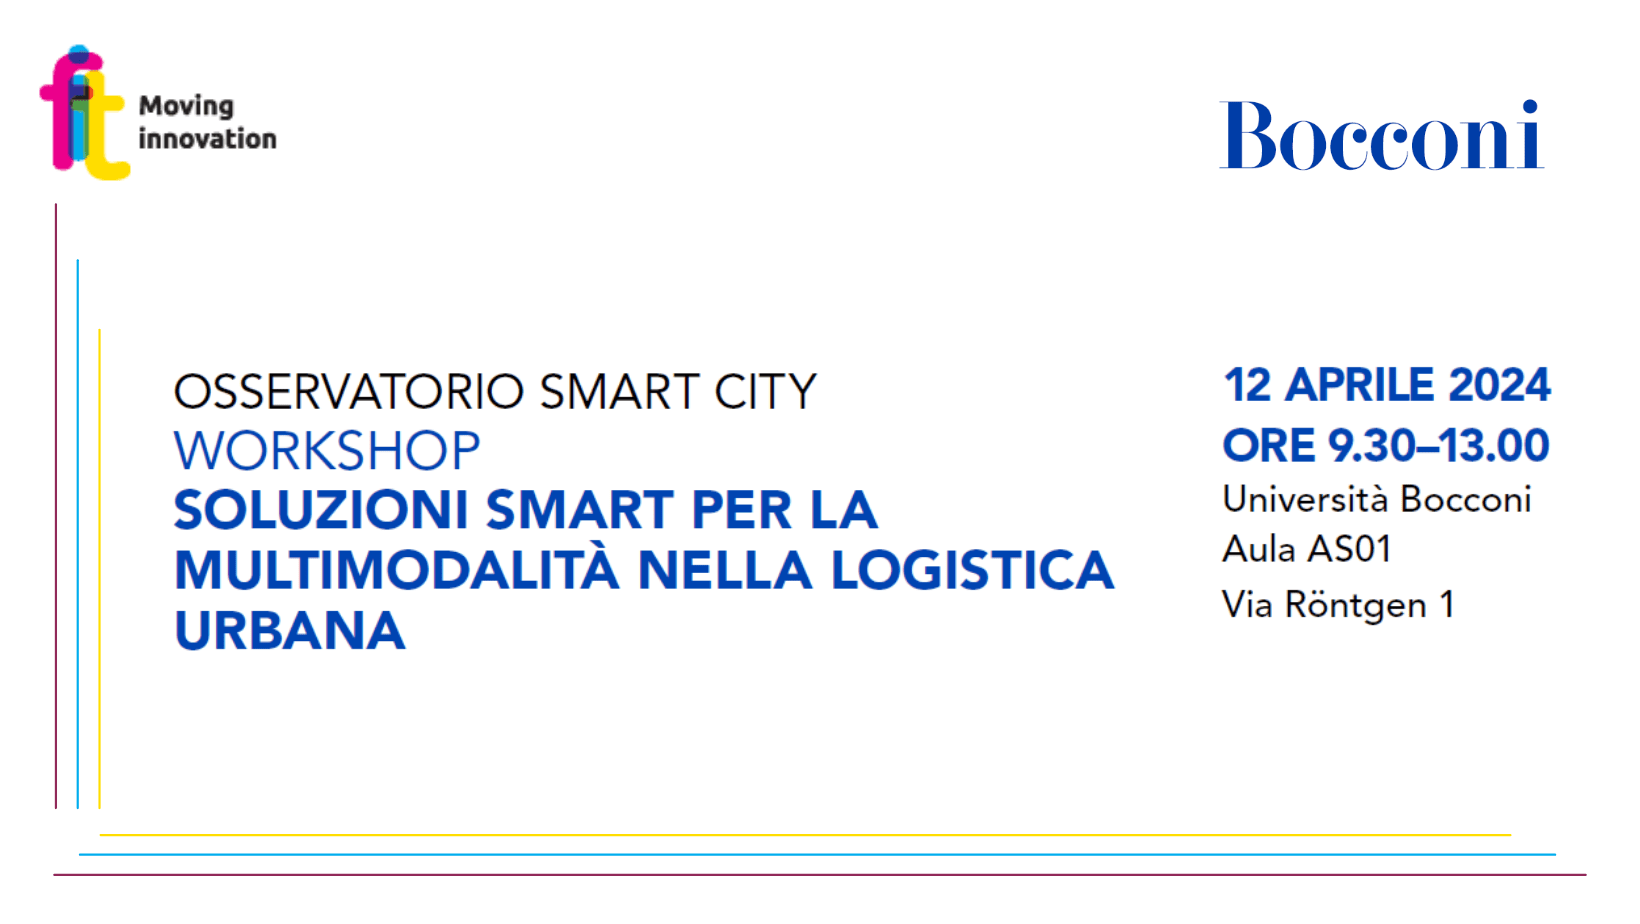 Paola Cossu workshop speaker ‘Smart solutions for multimodality in urban logistics’